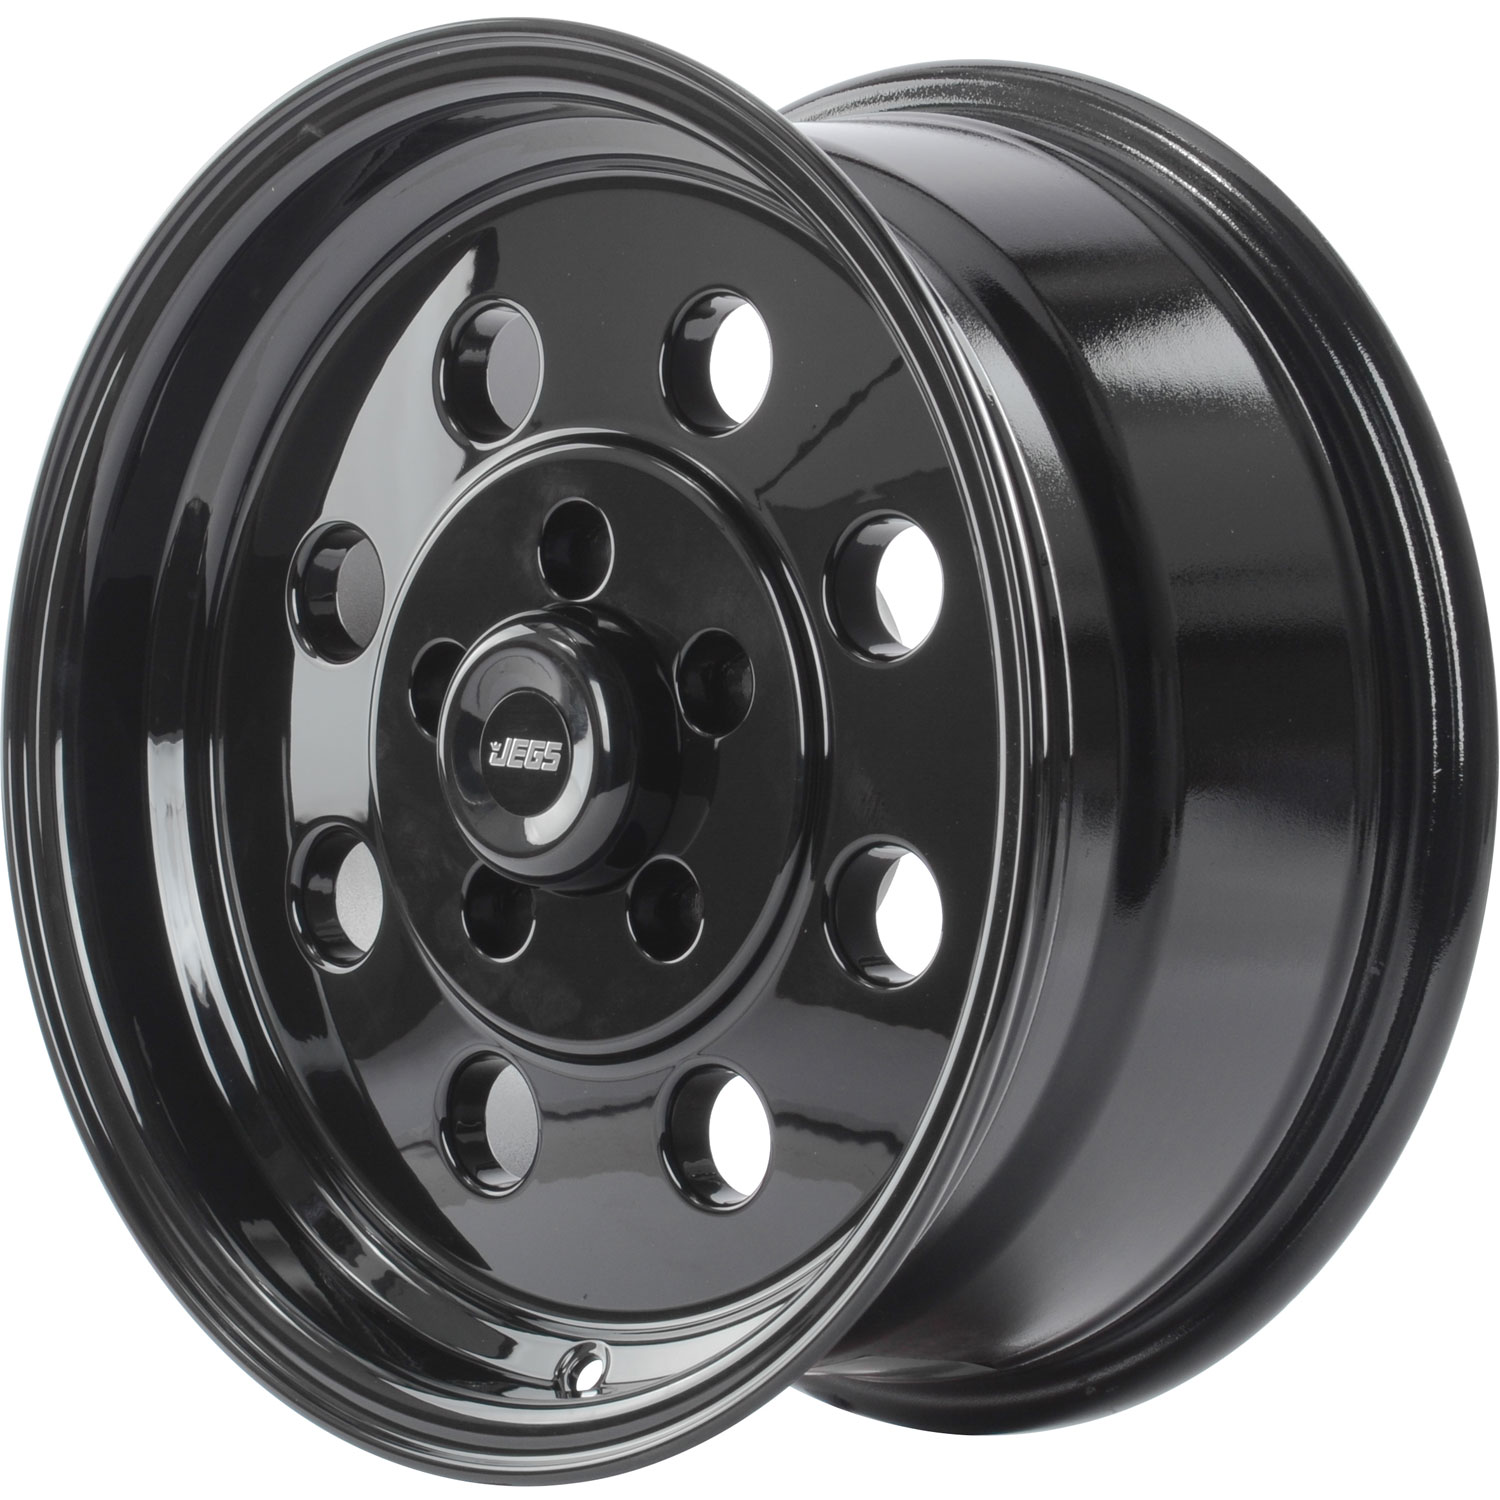 Sport Lite 8-Hole Wheel [Size: 15" x 7"] Black